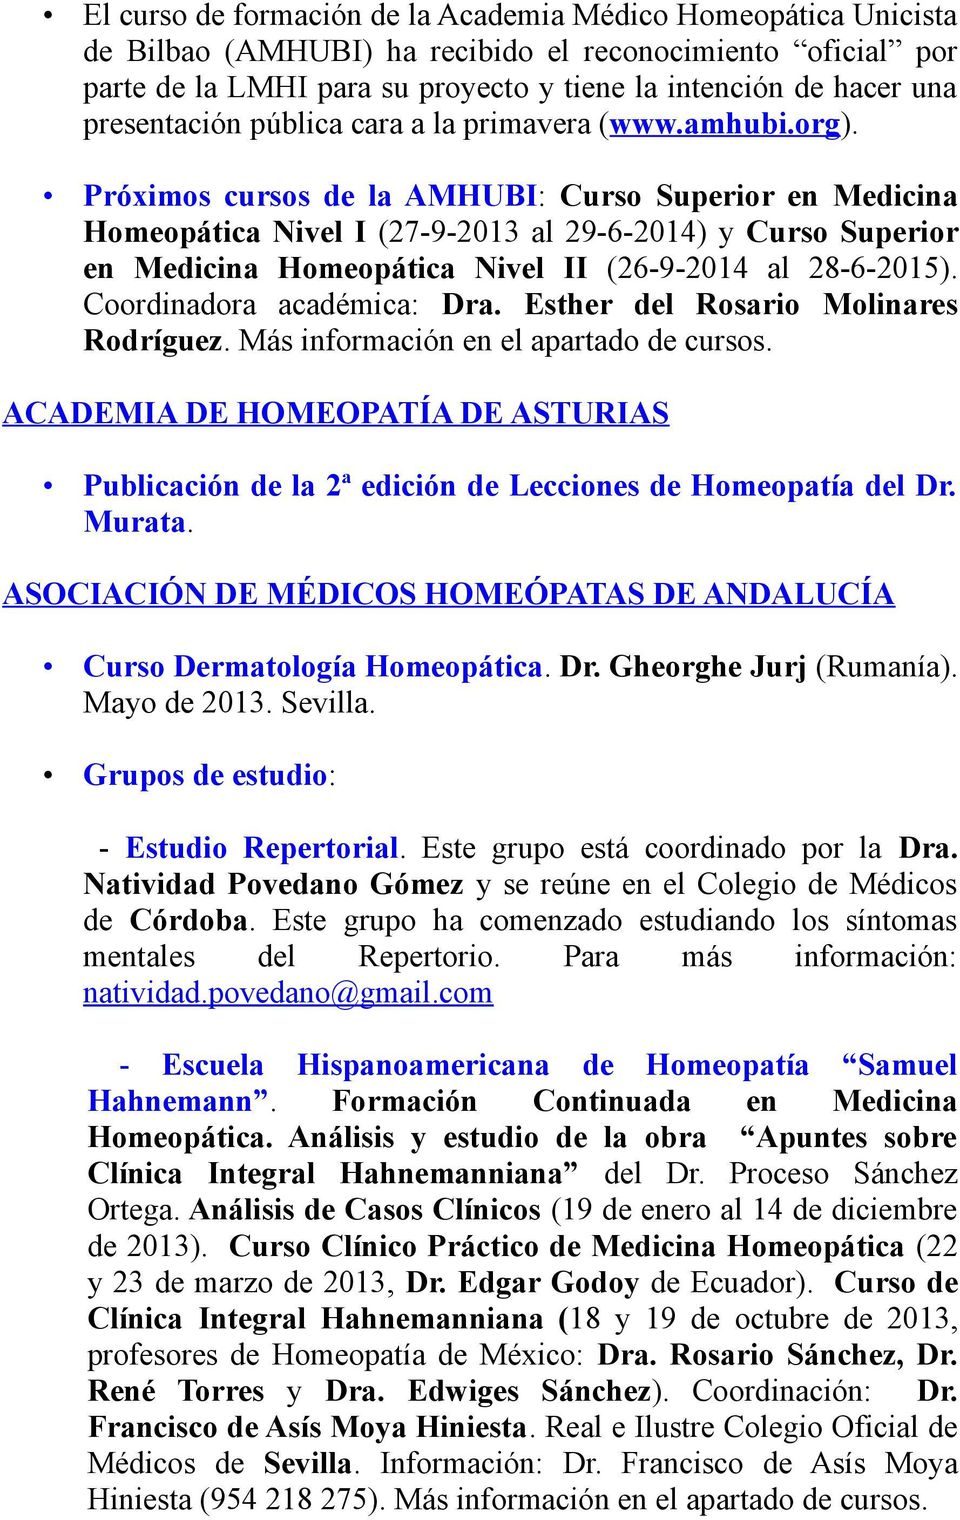 Próximos cursos de la AMHUBI: Curso Superior en Medicina Homeopática Nivel I (27-9-2013 al 29-6-2014) y Curso Superior en Medicina Homeopática Nivel II (26-9-2014 al 28-6-2015).